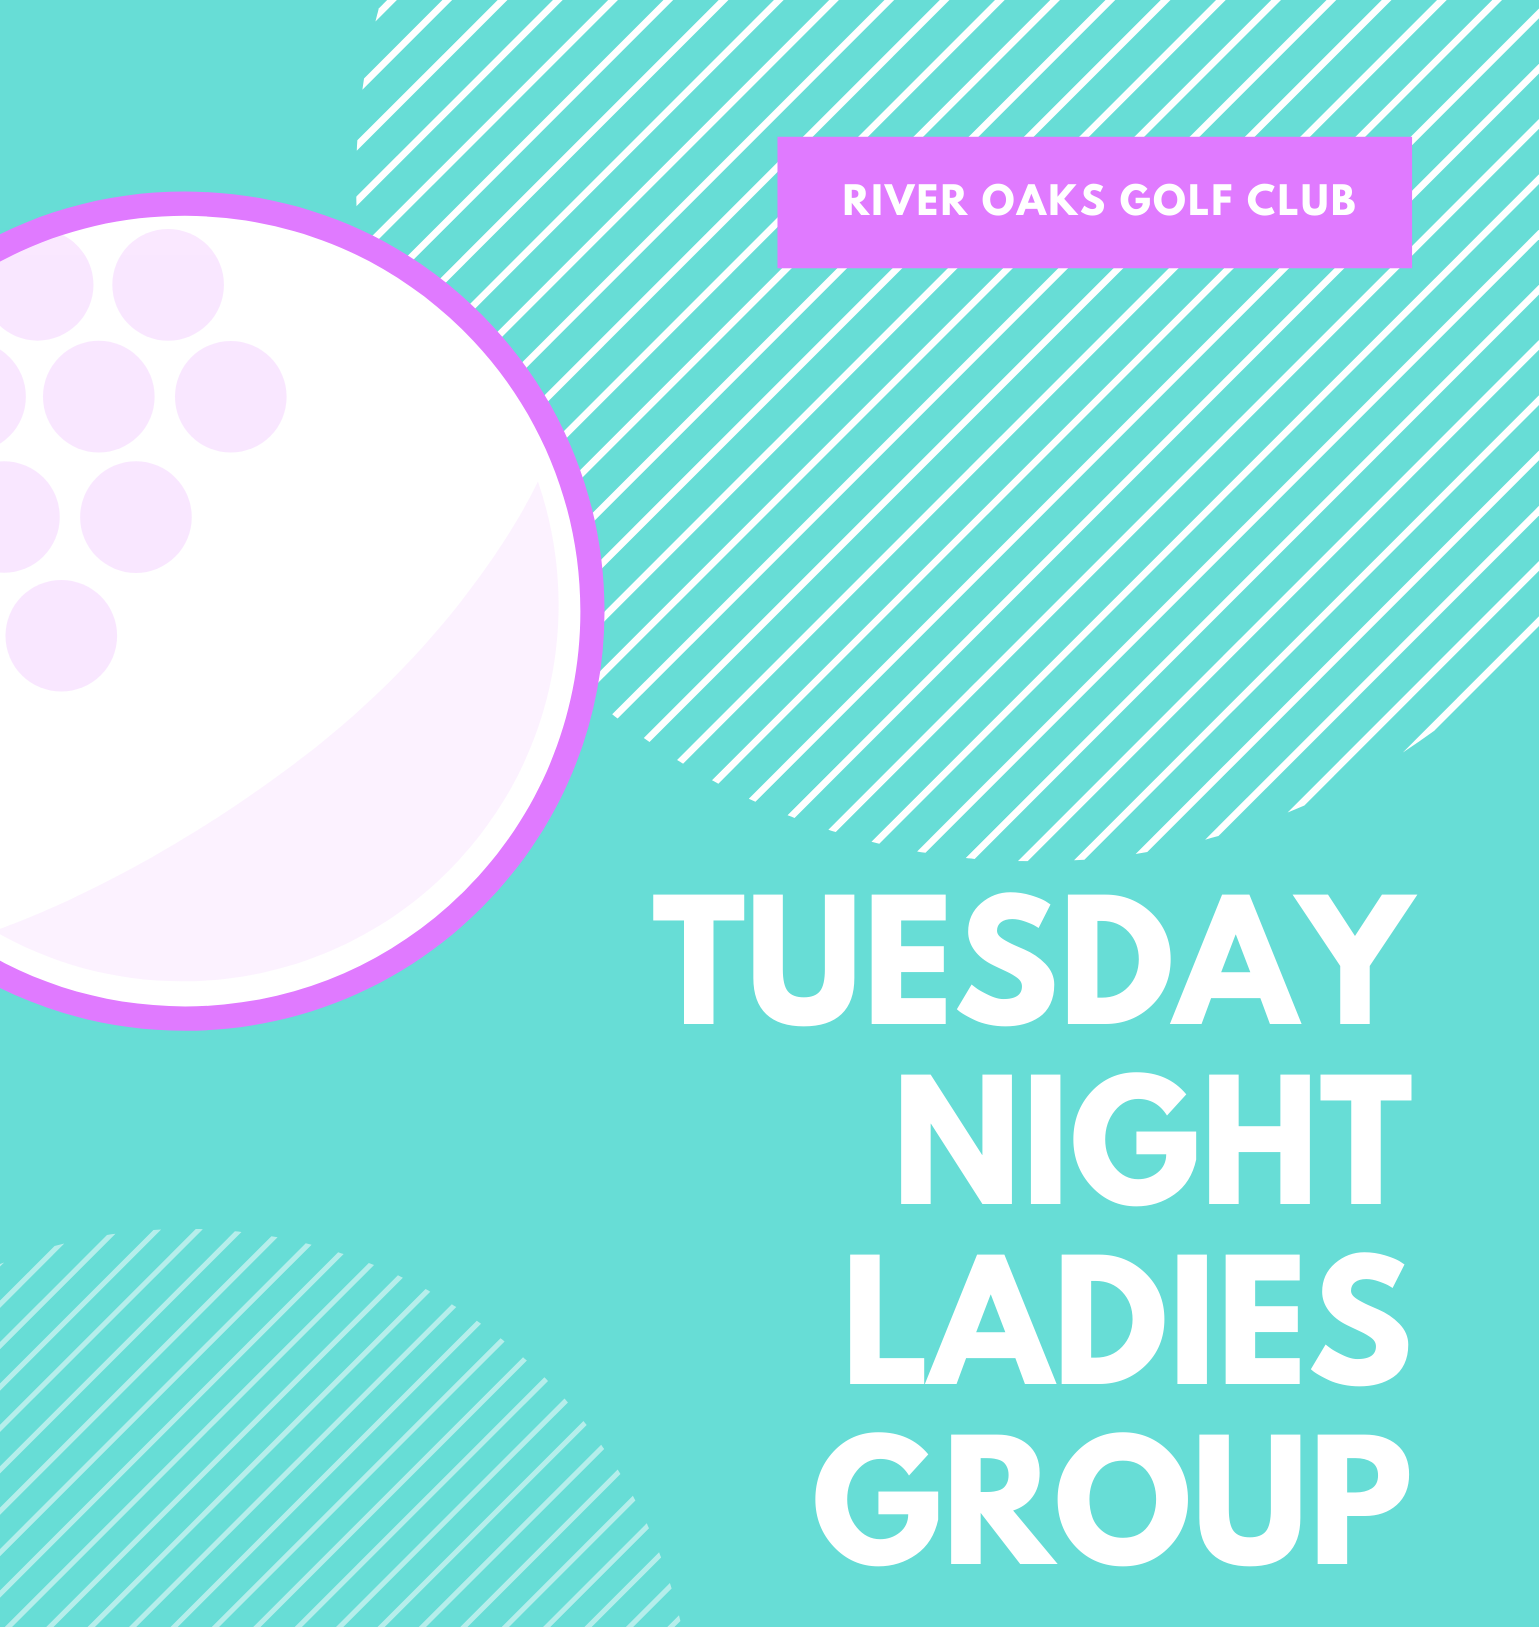 Tuesday Night Ladies Group Headline